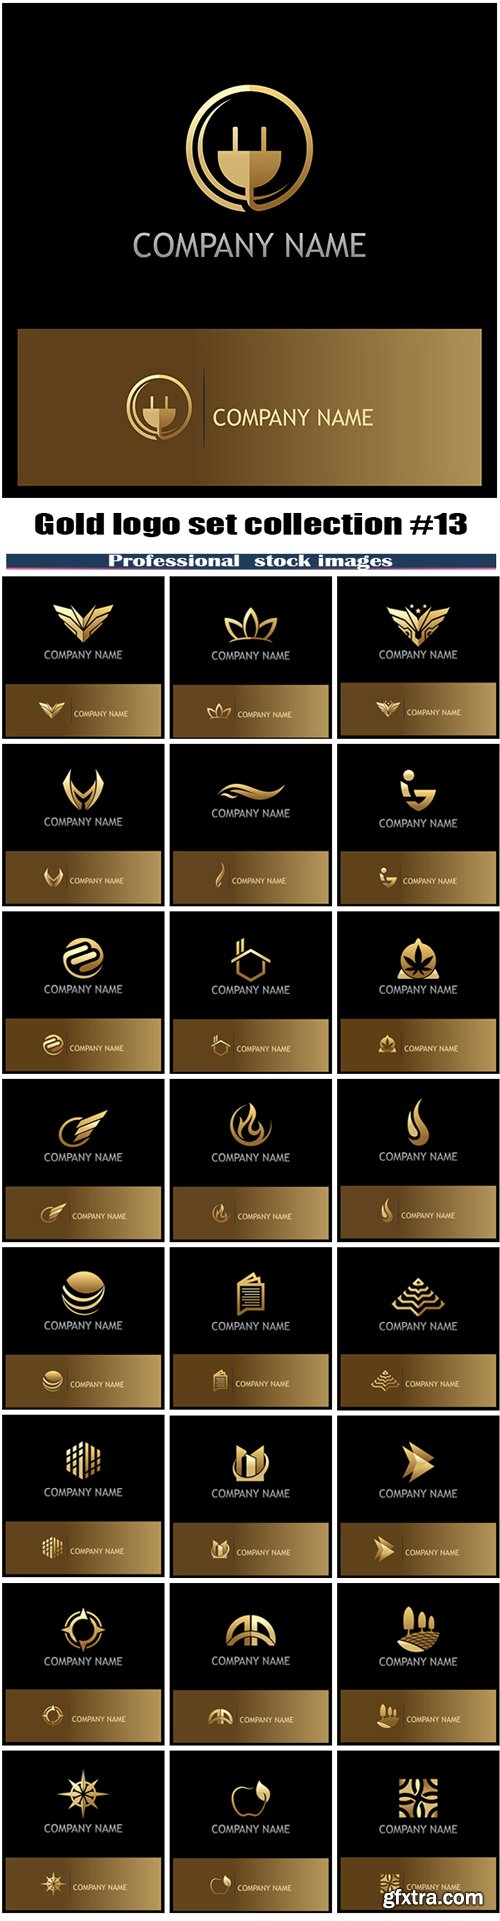 Gold logo set collection #13